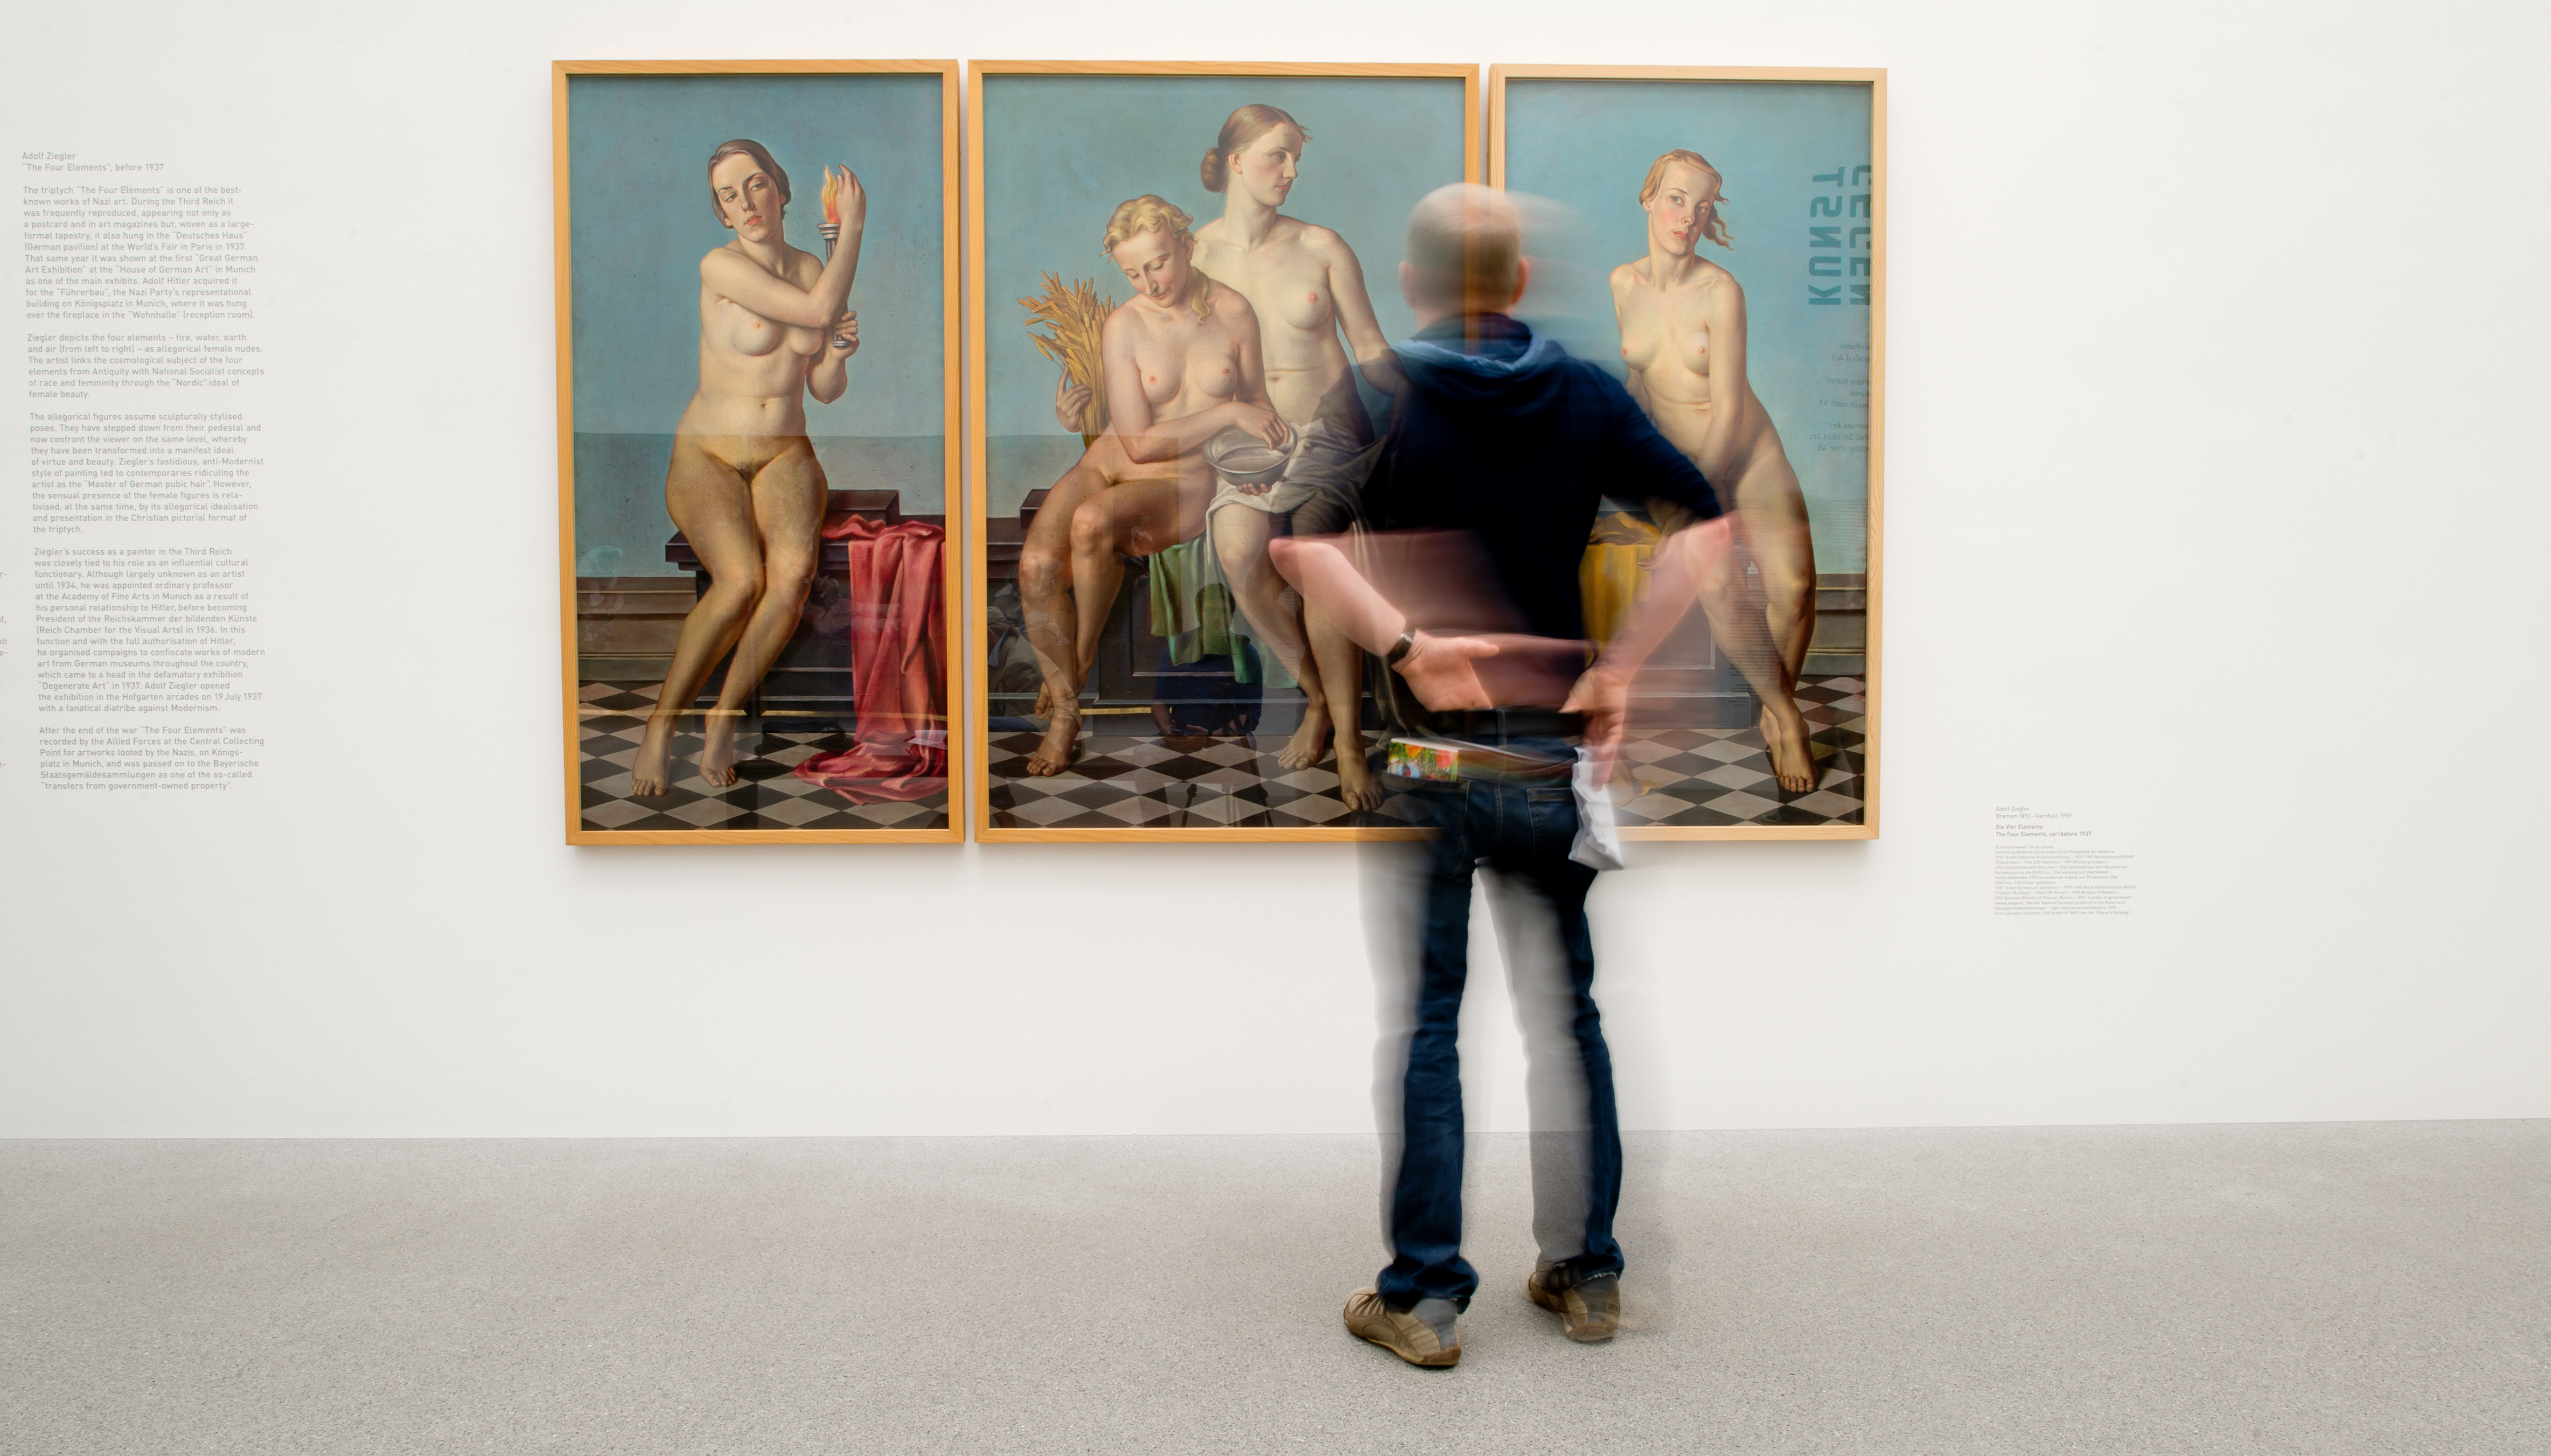 Nazi-Kunst in der Pinakothek: Aufklären statt Wegsperren